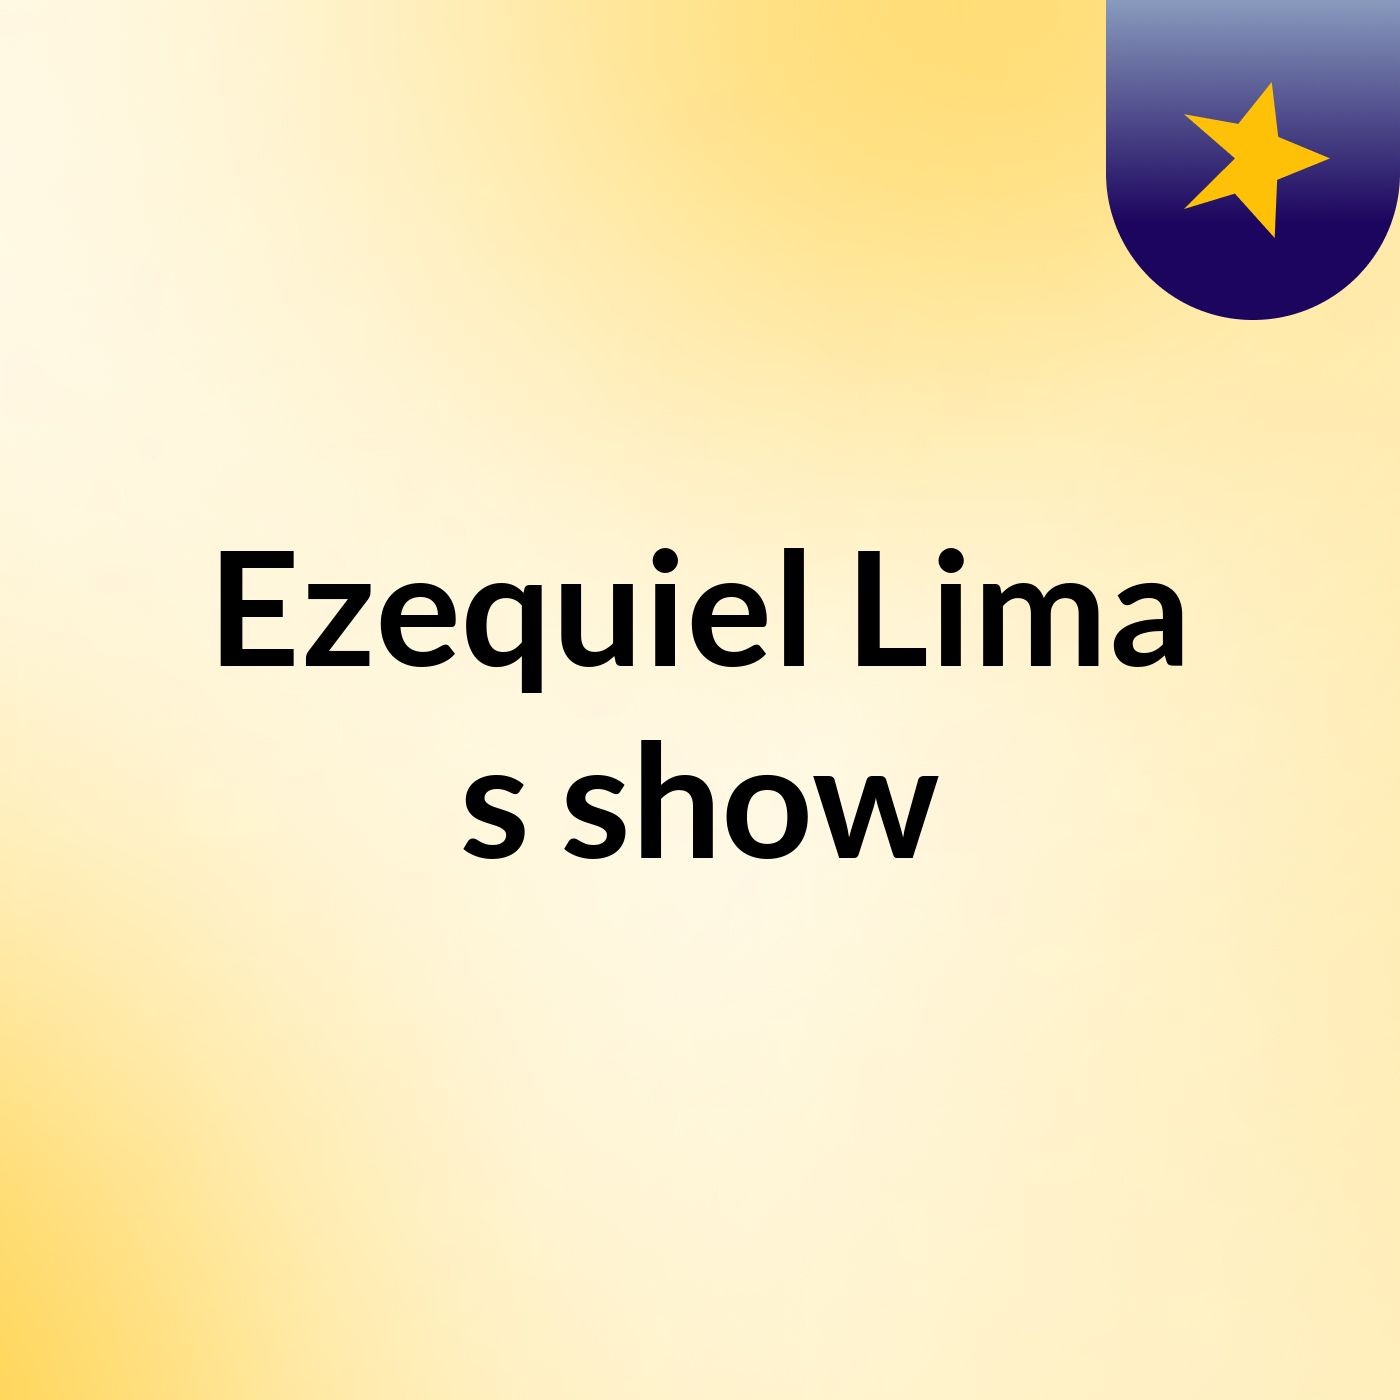 Ezequiel Lima's show